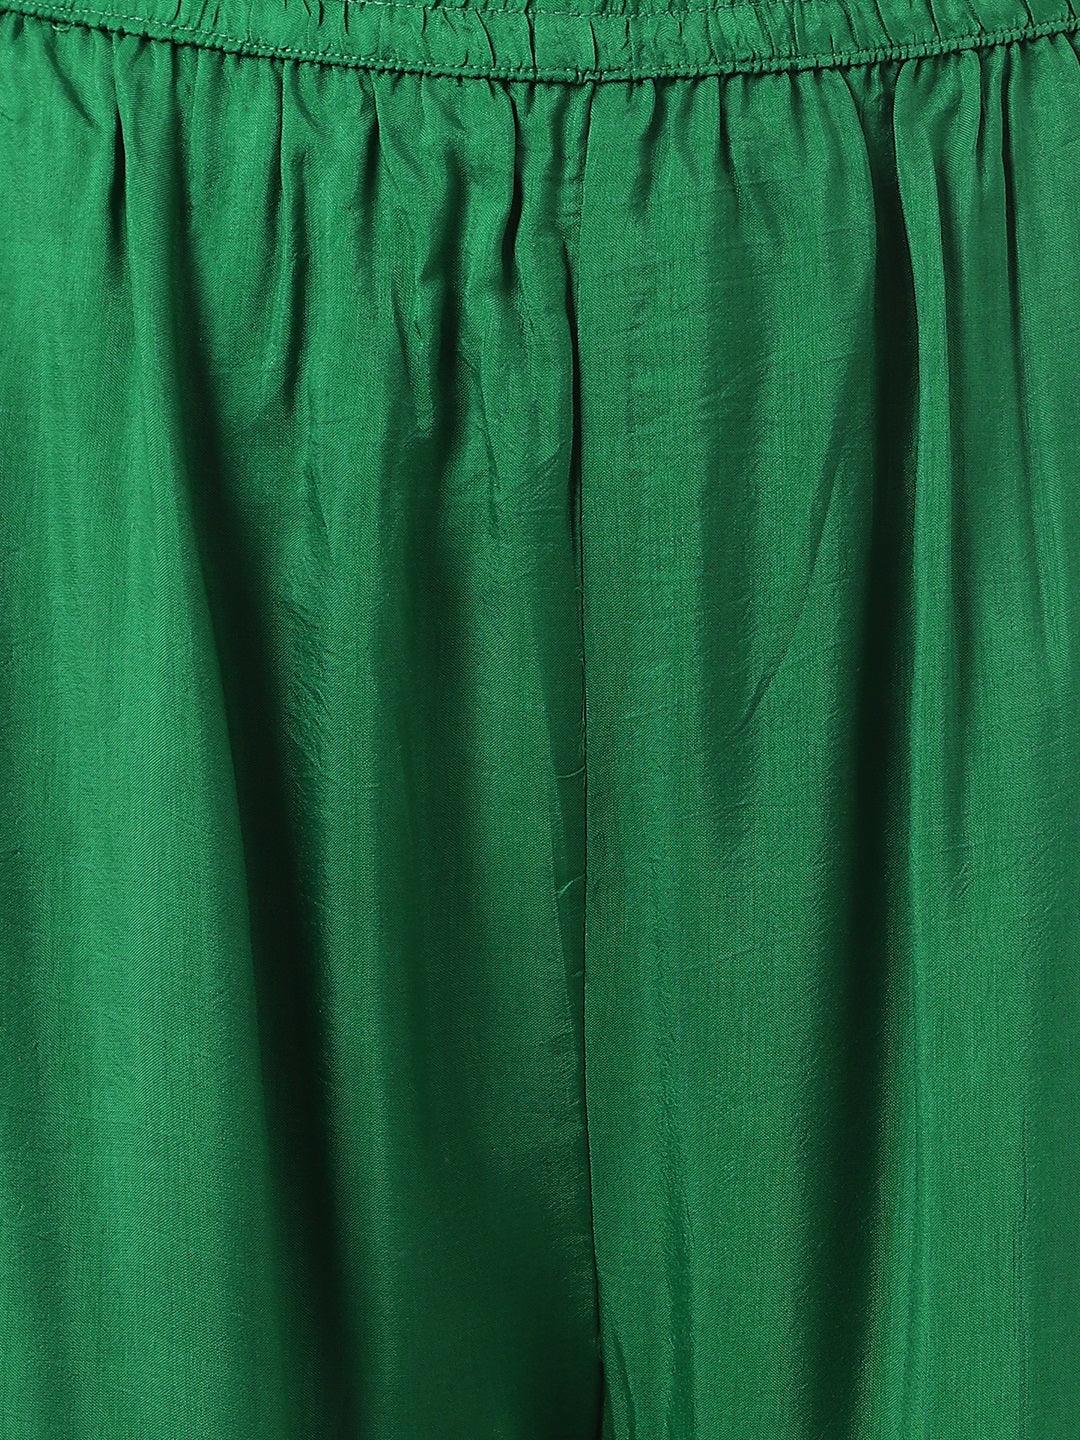 Divena Dark Green russian silk Hand embroidery Kurta Sharara with Organza dupatta - divena world